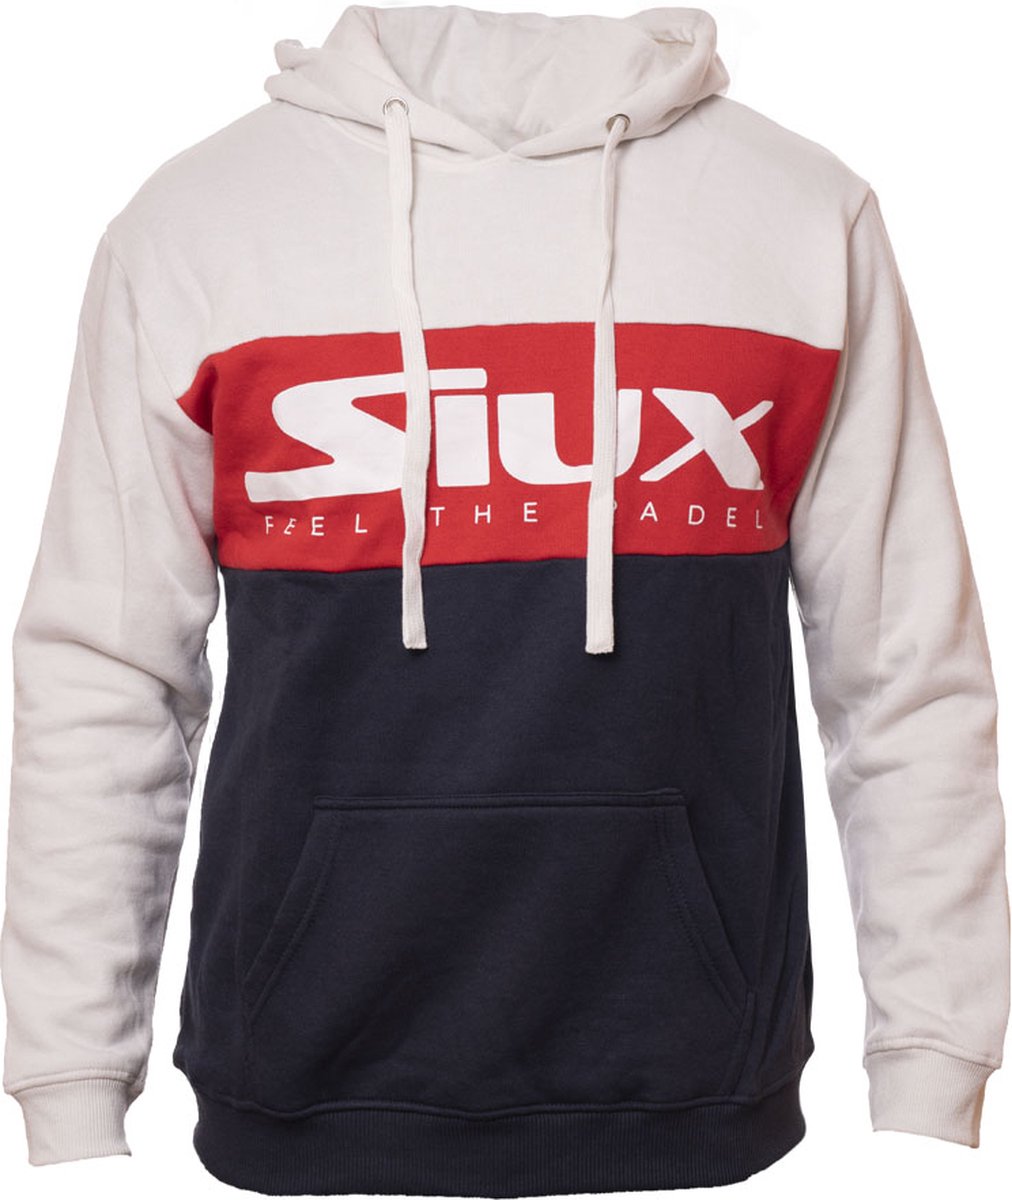 Siux sweater / hoody XXL